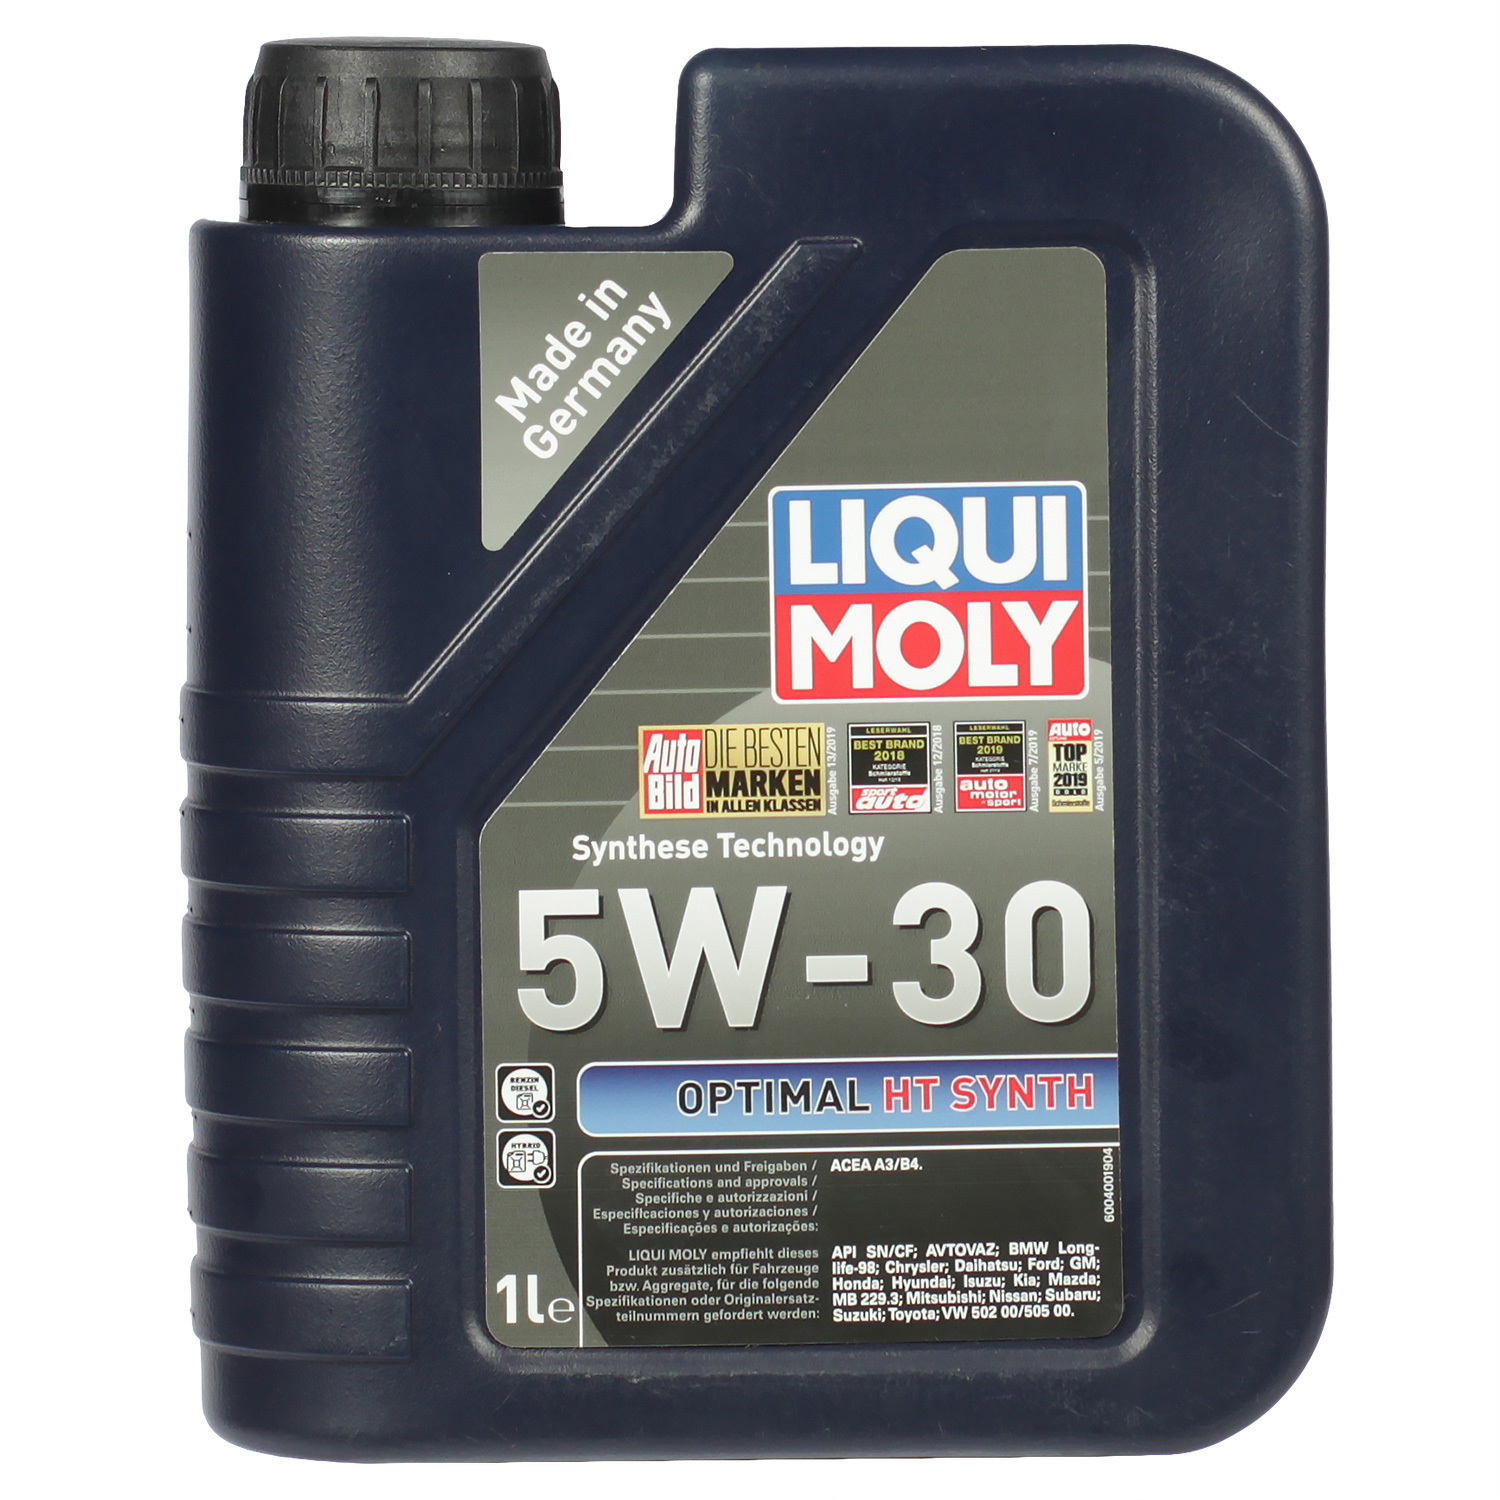 Liqui Moly Моторное масло Liqui Moly Optimal HT Synth 5W-30, 1 л liqui moly моторное масло liqui moly optimal ht synth 5w 30 1 л